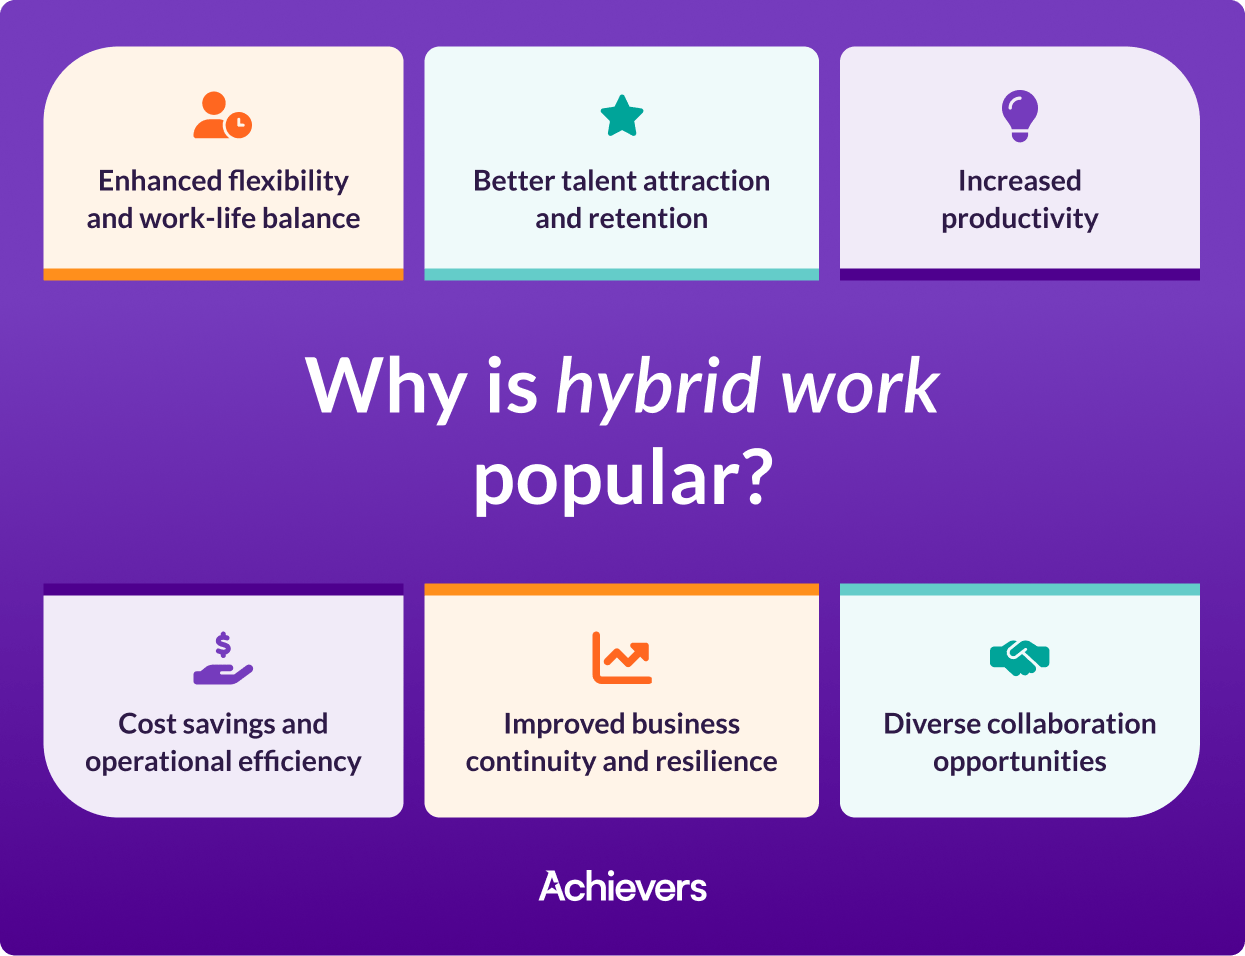 Why is hybrid work popular?